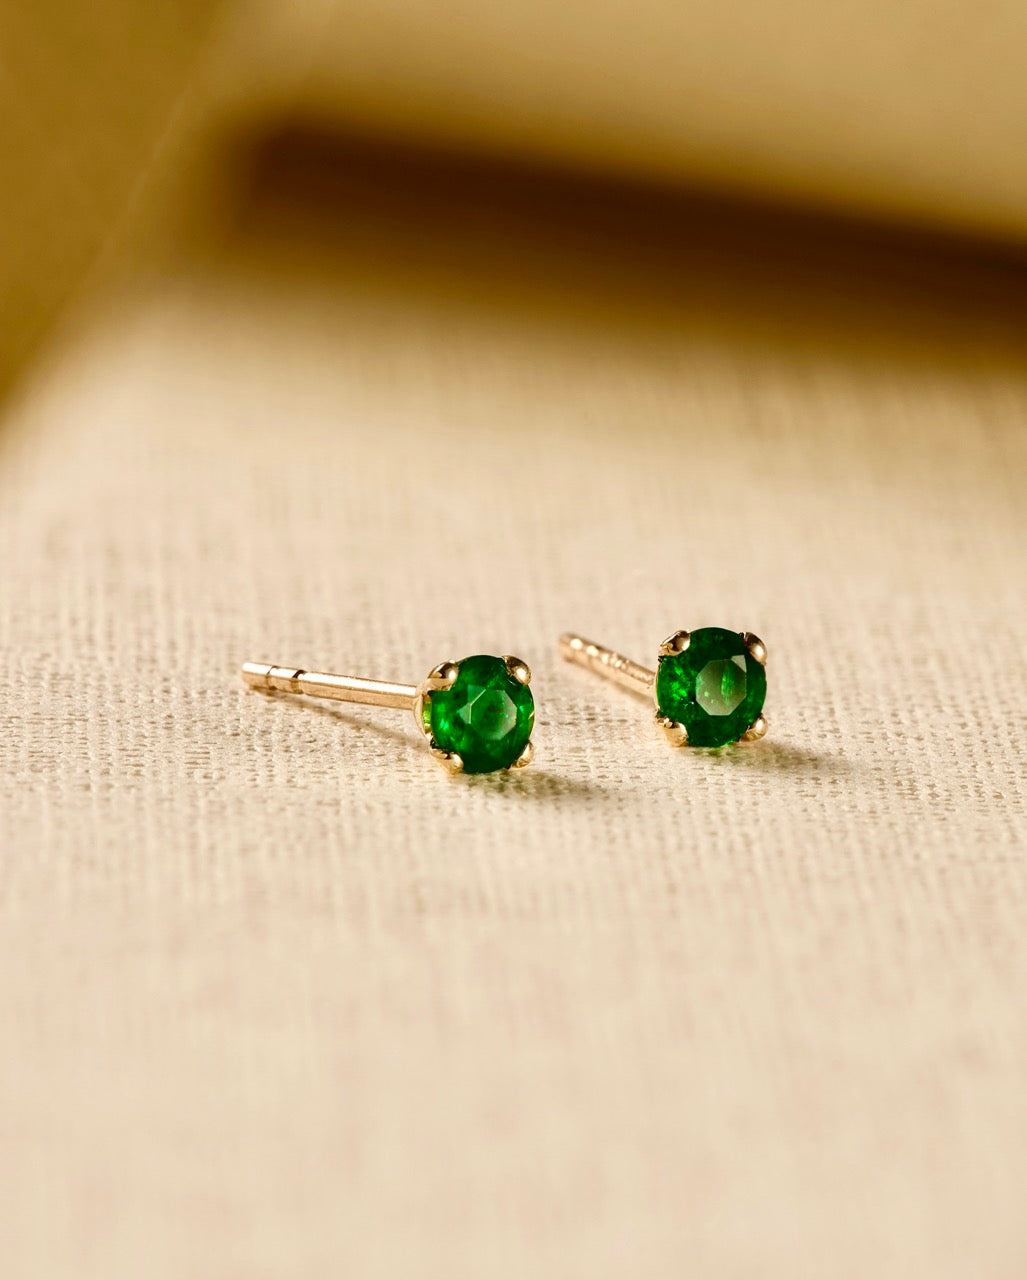 Emerald gold stud earrings on beige material